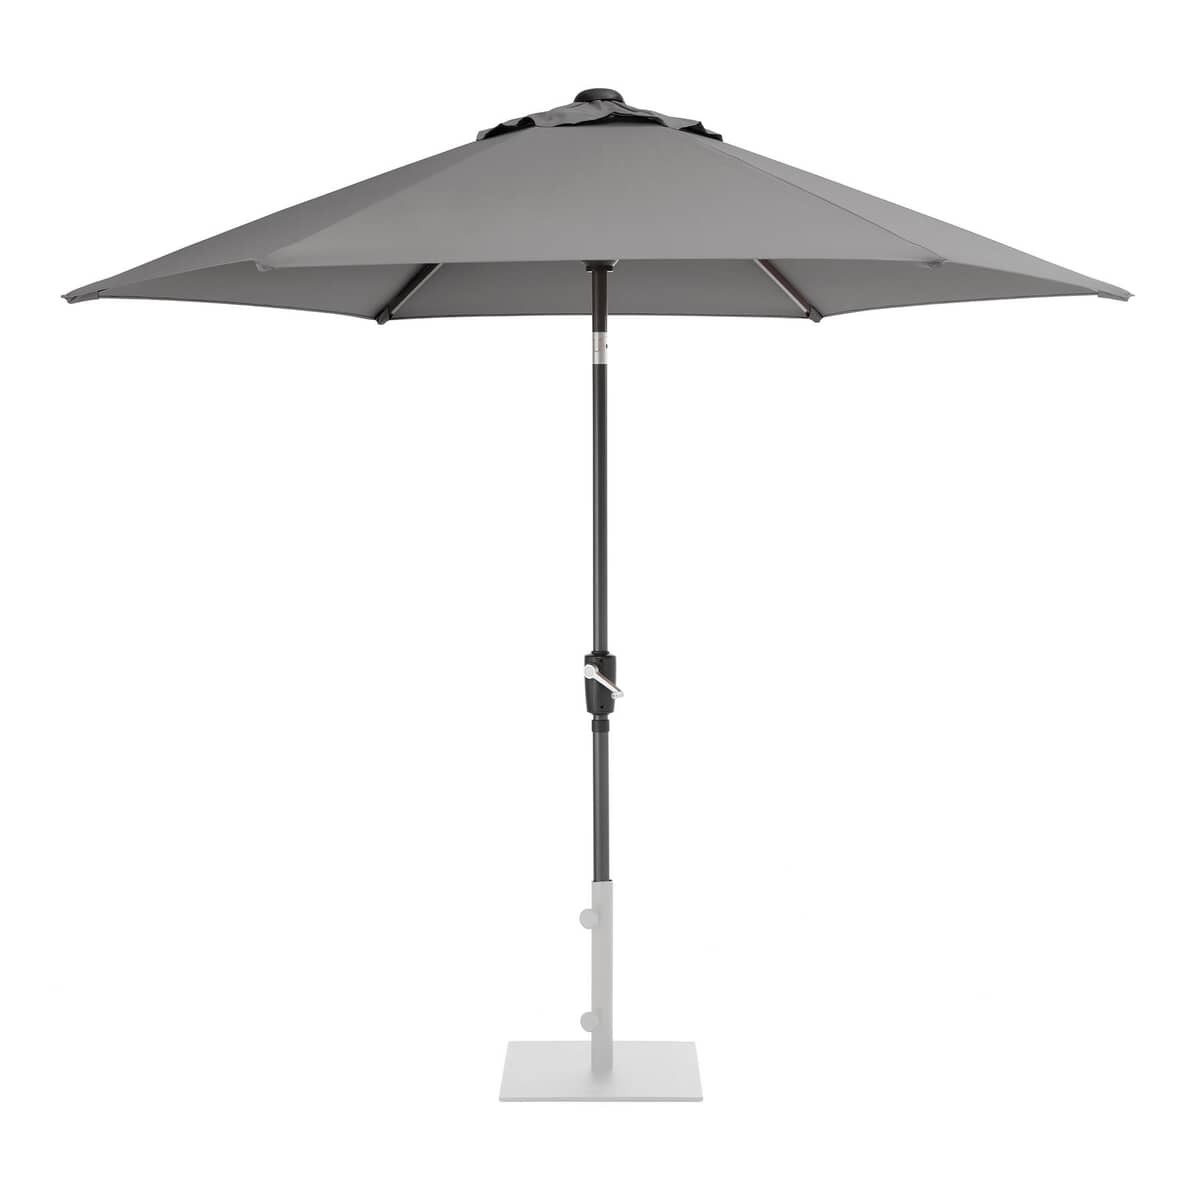 Kettler 2.5m Wind Up Parasol with tilt - Grey frame and Slate Canopy